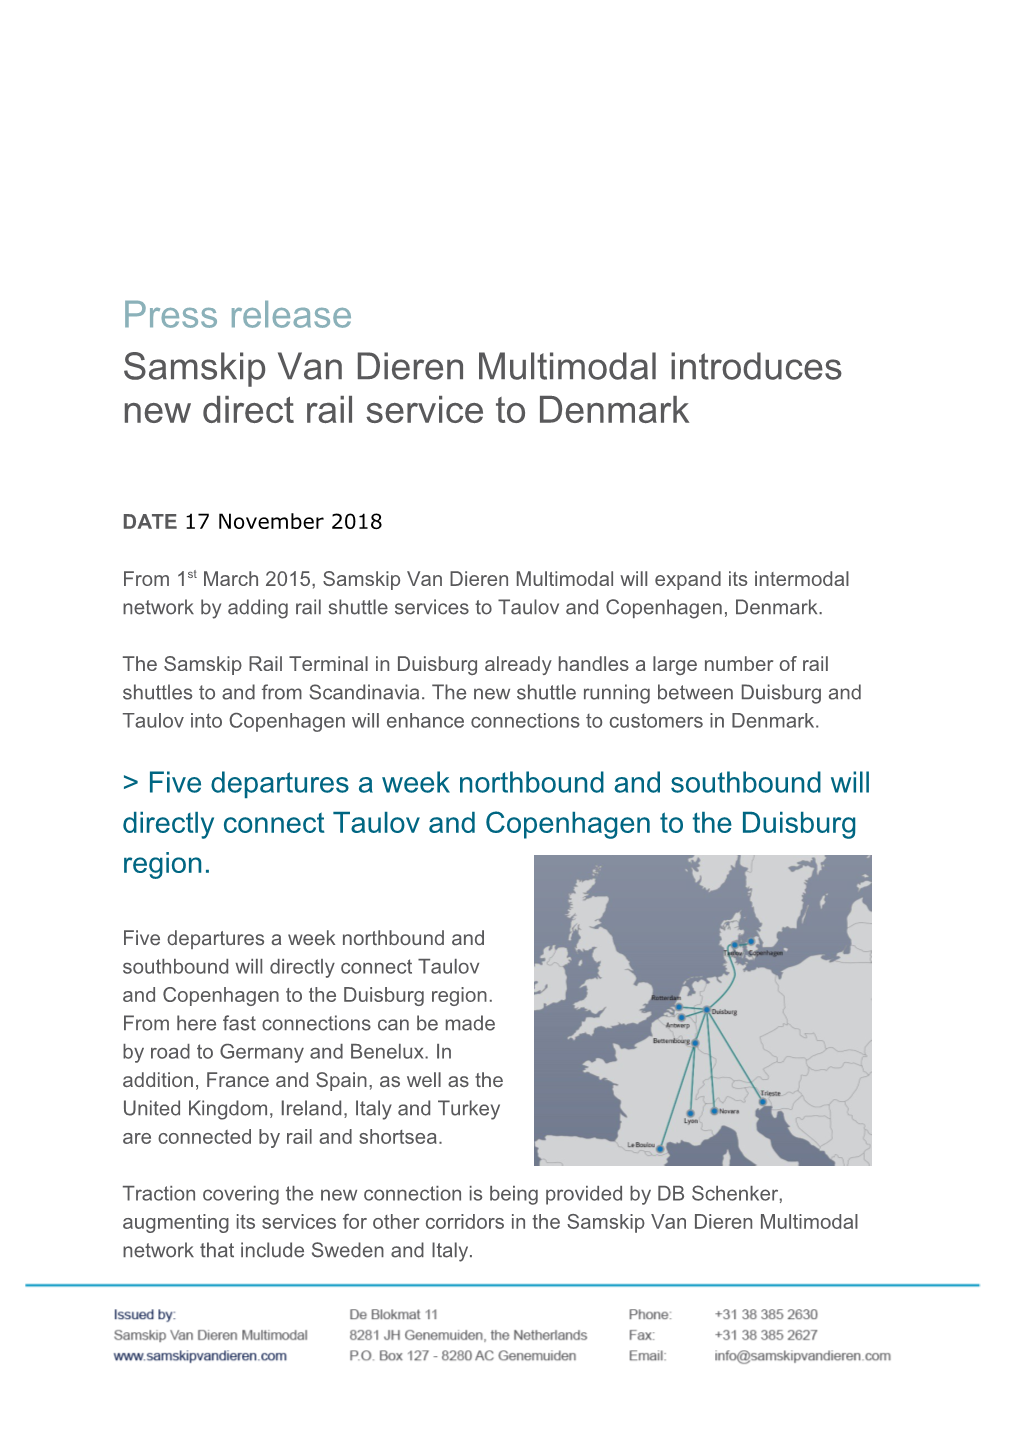 Samskip Van Dieren Multimodal Introduces New Direct Rail Service to Denmark